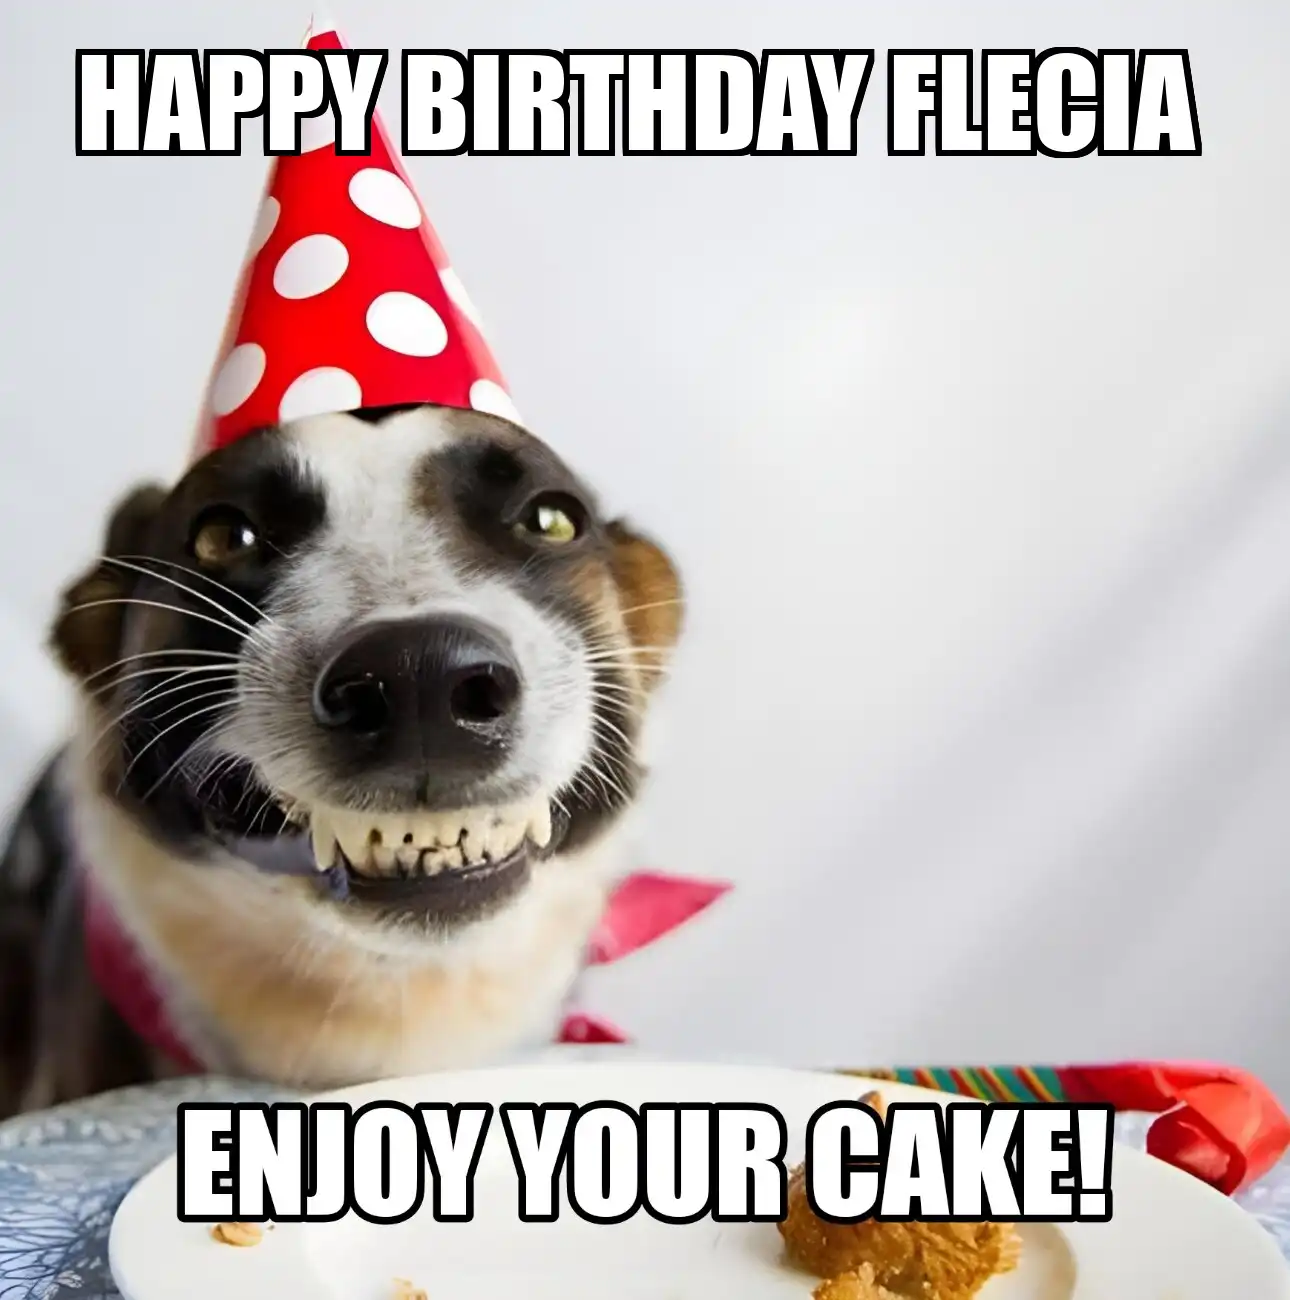 Happy Birthday Flecia Enjoy Your Cake Dog Meme